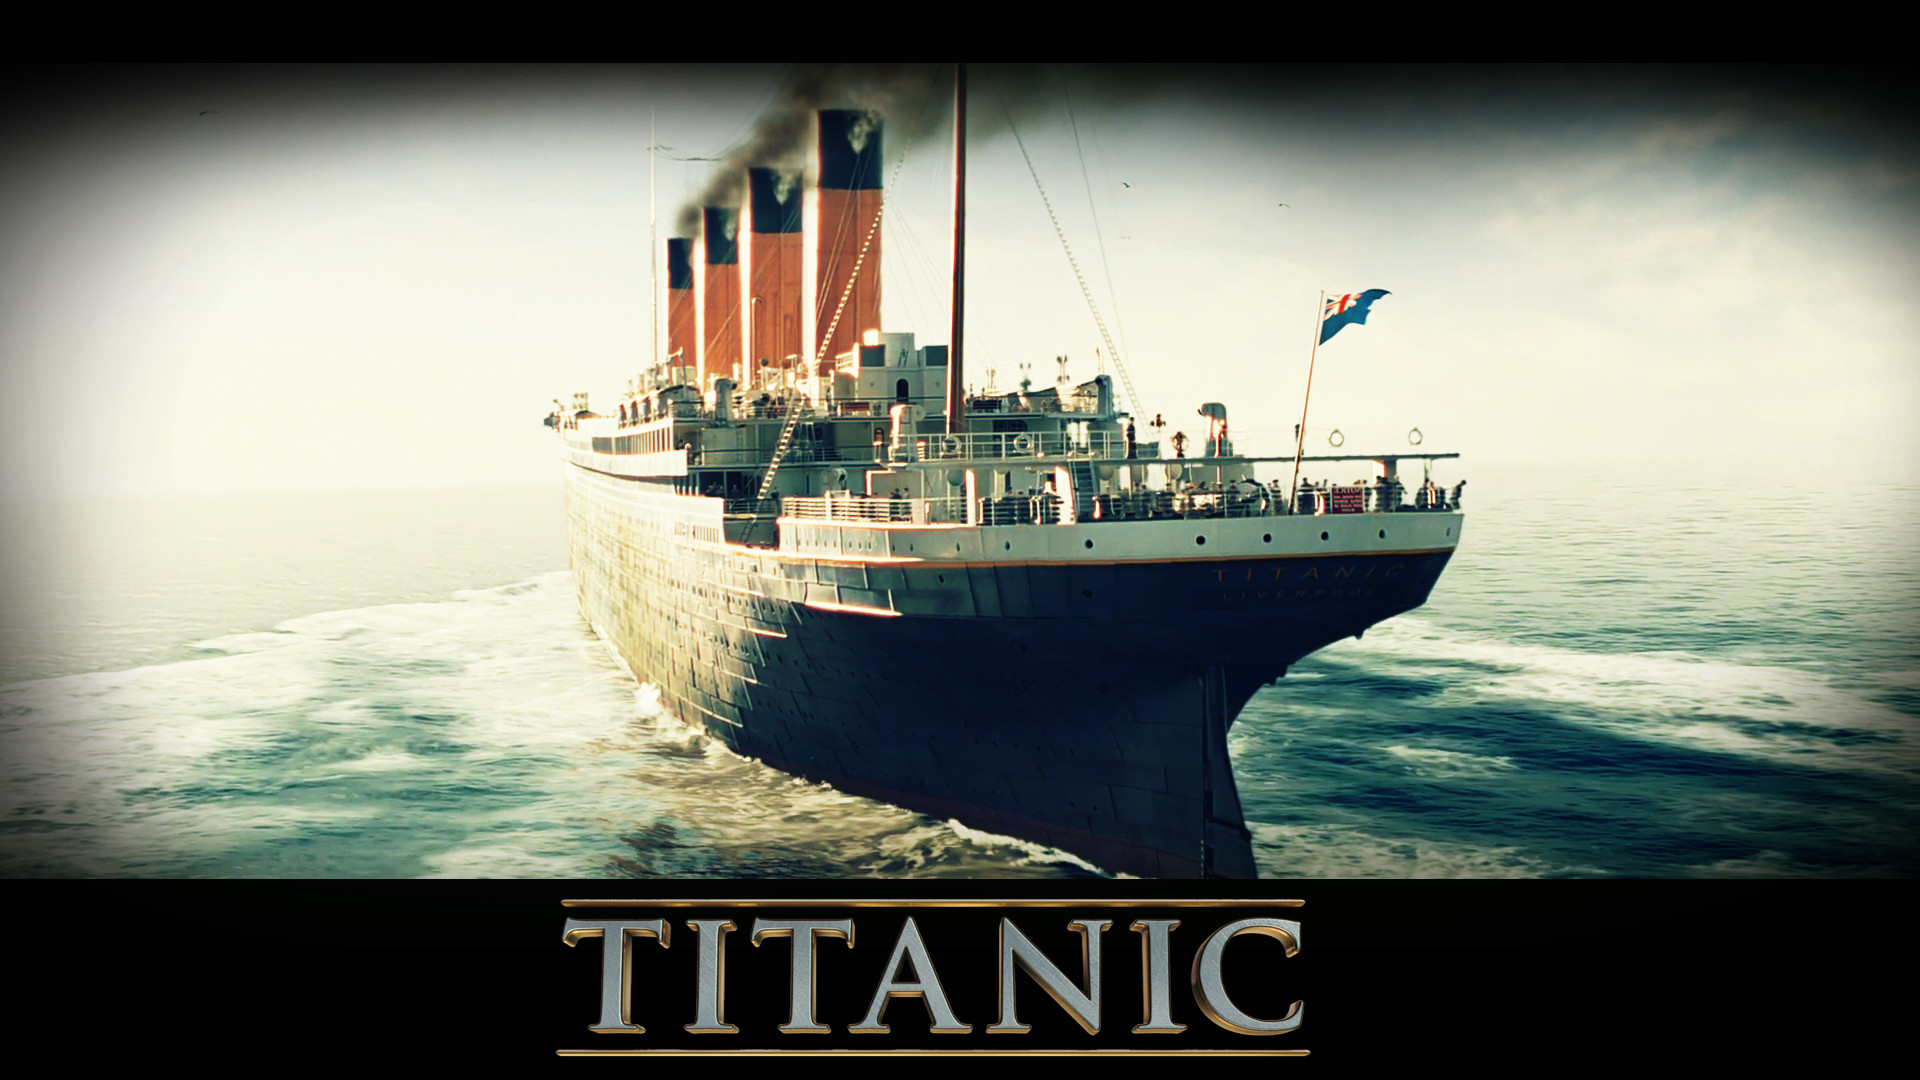 1920x1080 Titanic HD Wallpapers Backgrounds Wallpaper | HD Wallpapers | Pinterest